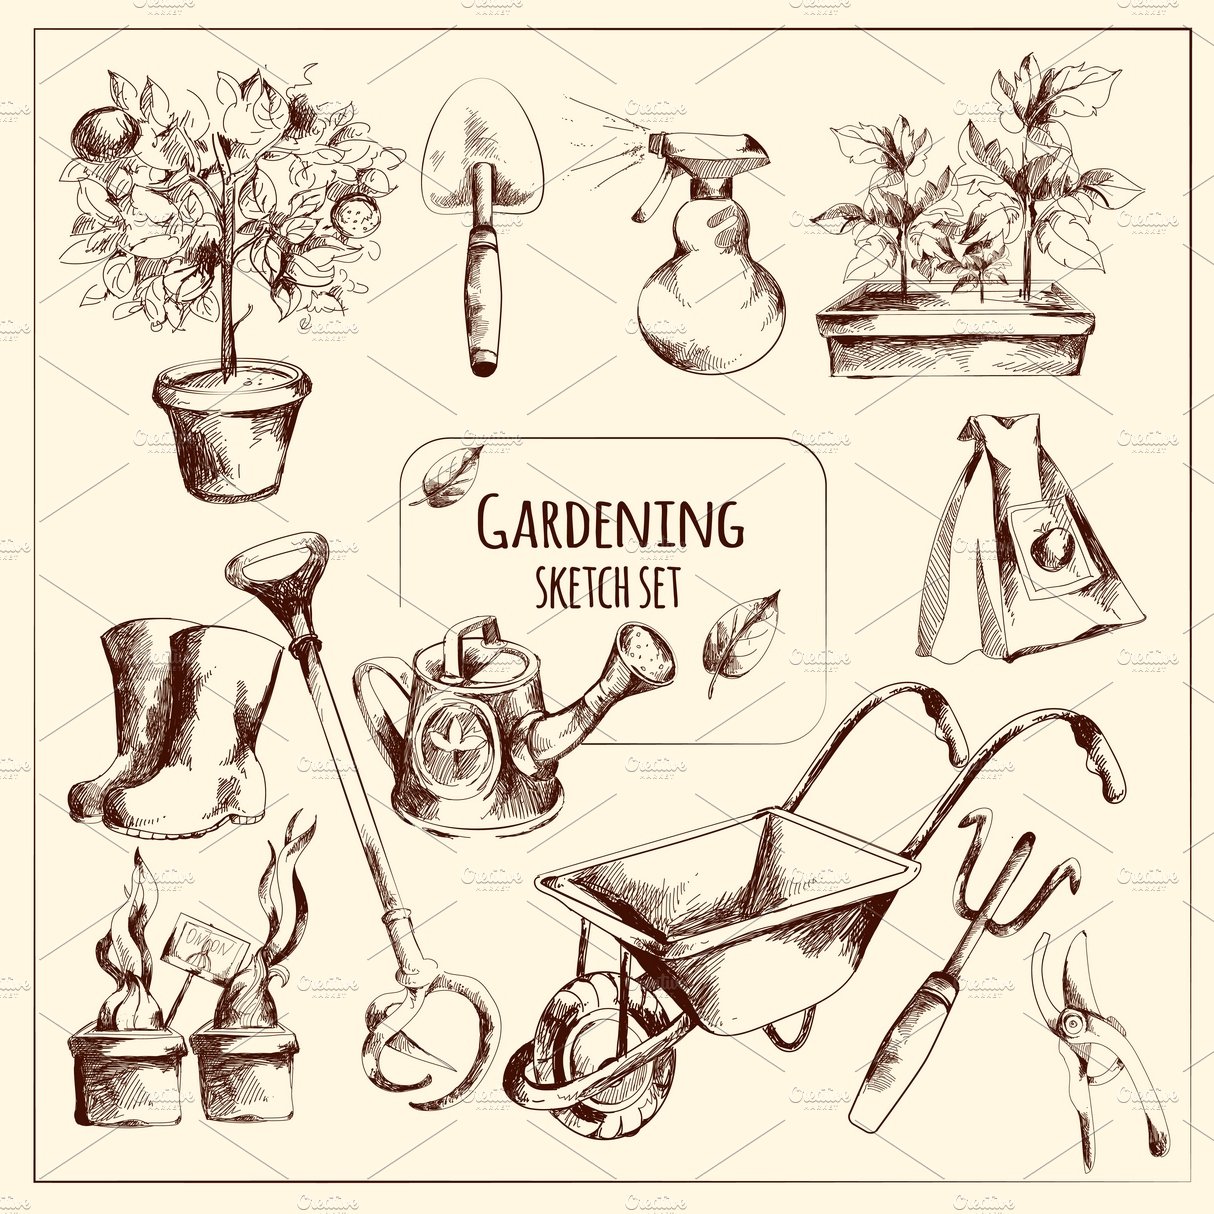 Gardening instruments sketch set cover image.